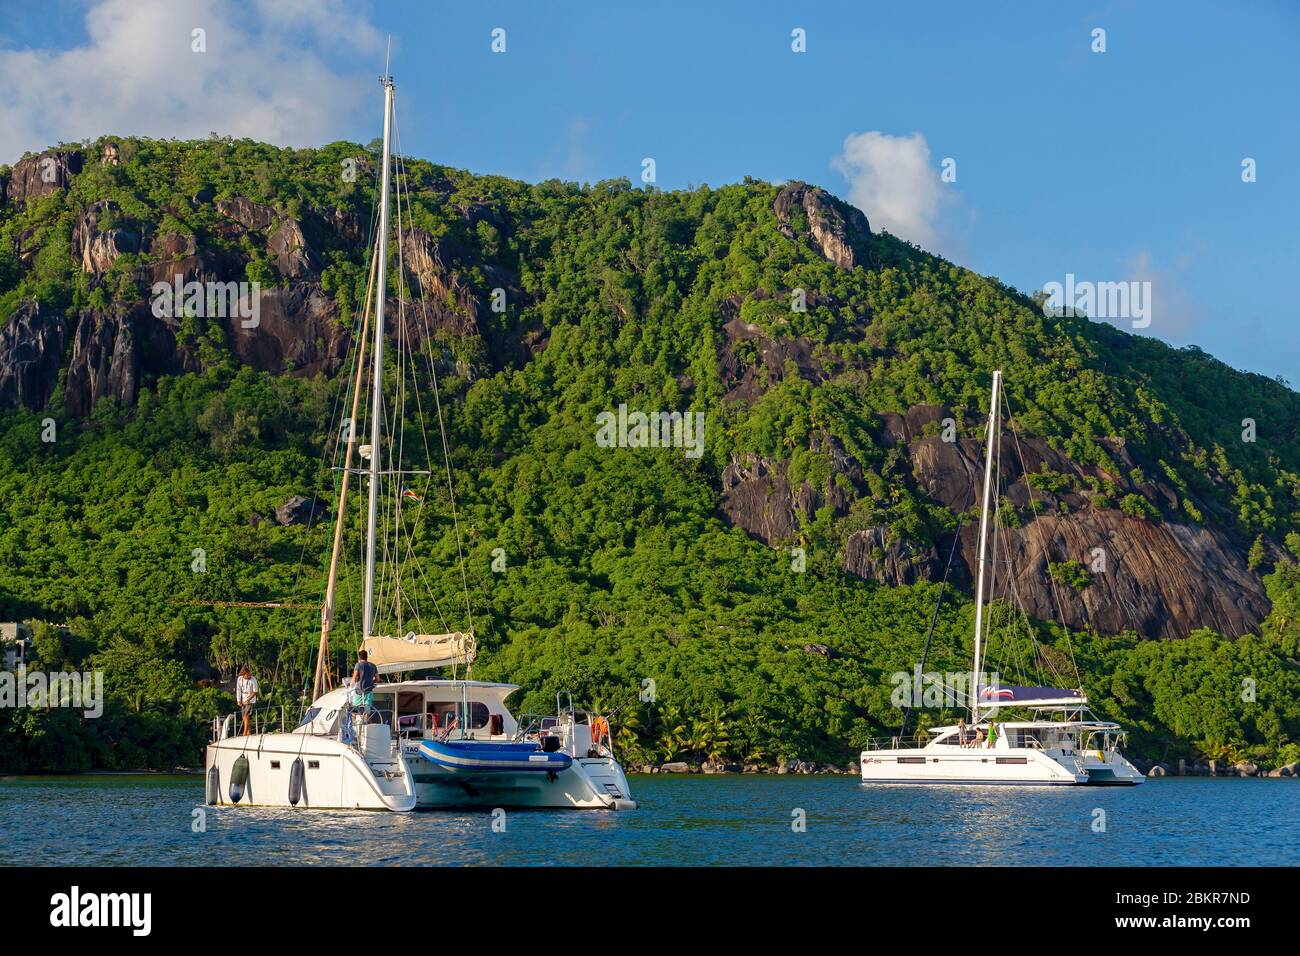 Seychelles, Sainte Anne island, boats at anchor Stock Photo